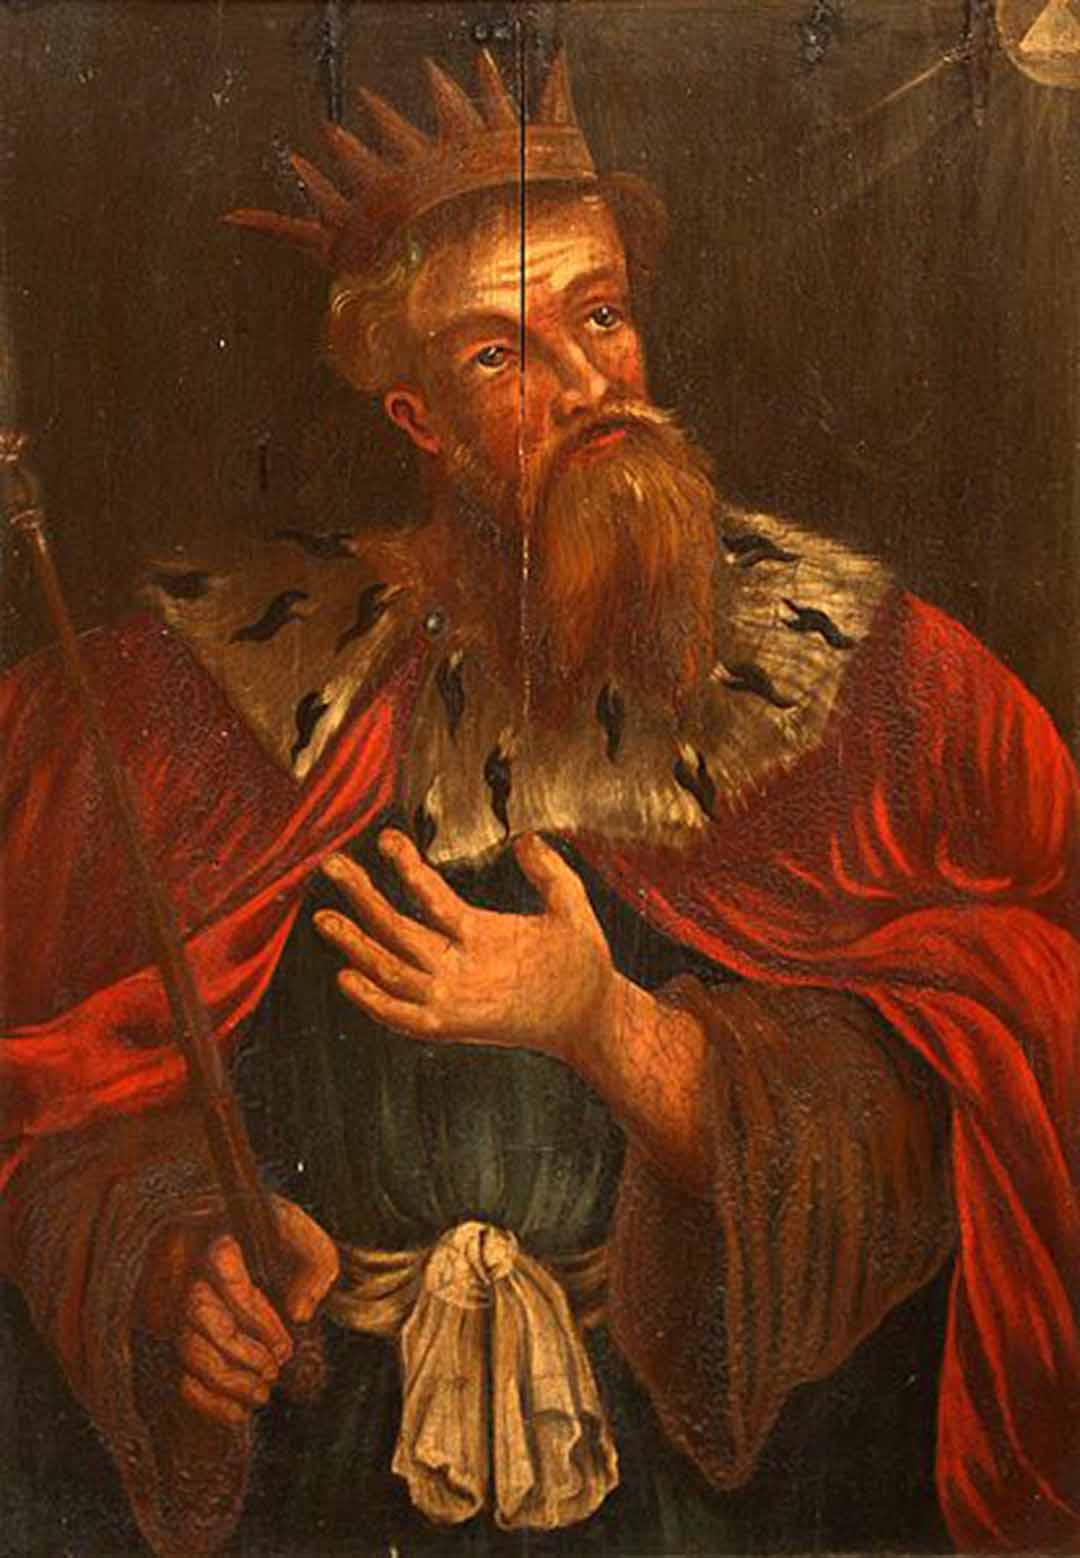 Painting of King Hezekiah, artist unknown